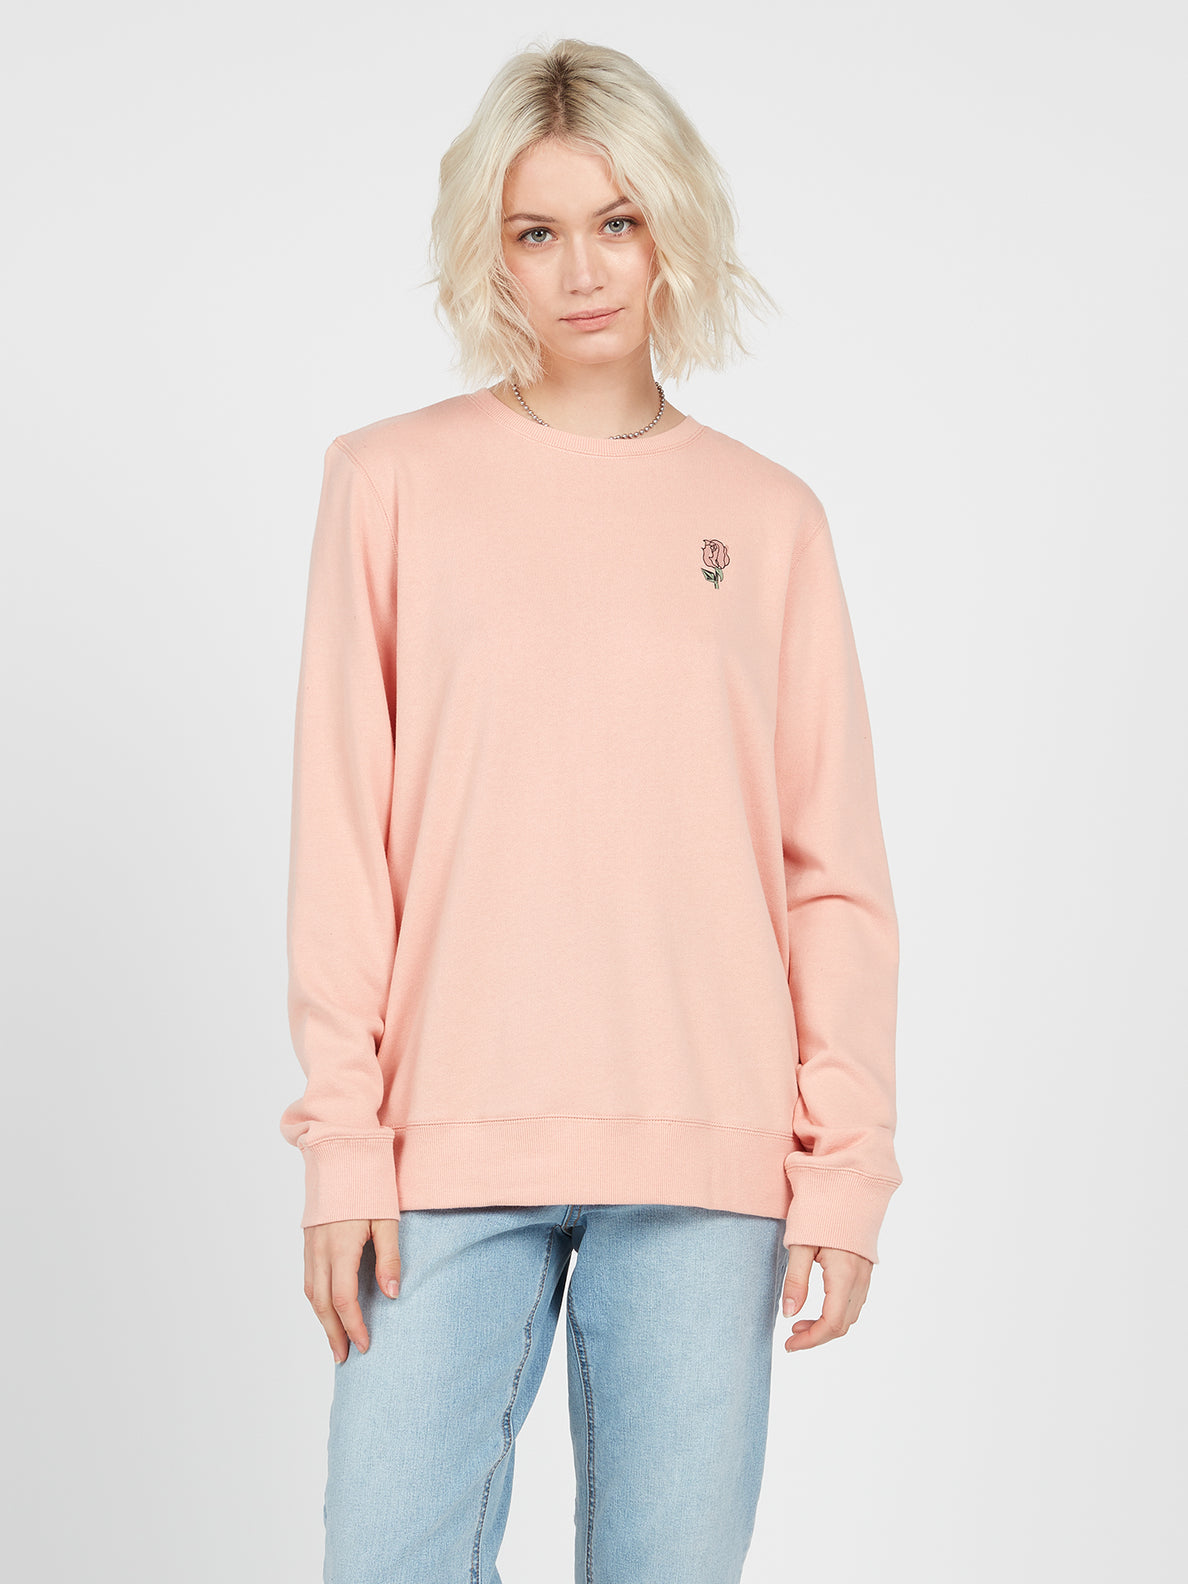 Truly Deal Sweatshirt - Hazey Pink (B4642200_HZP) [1]